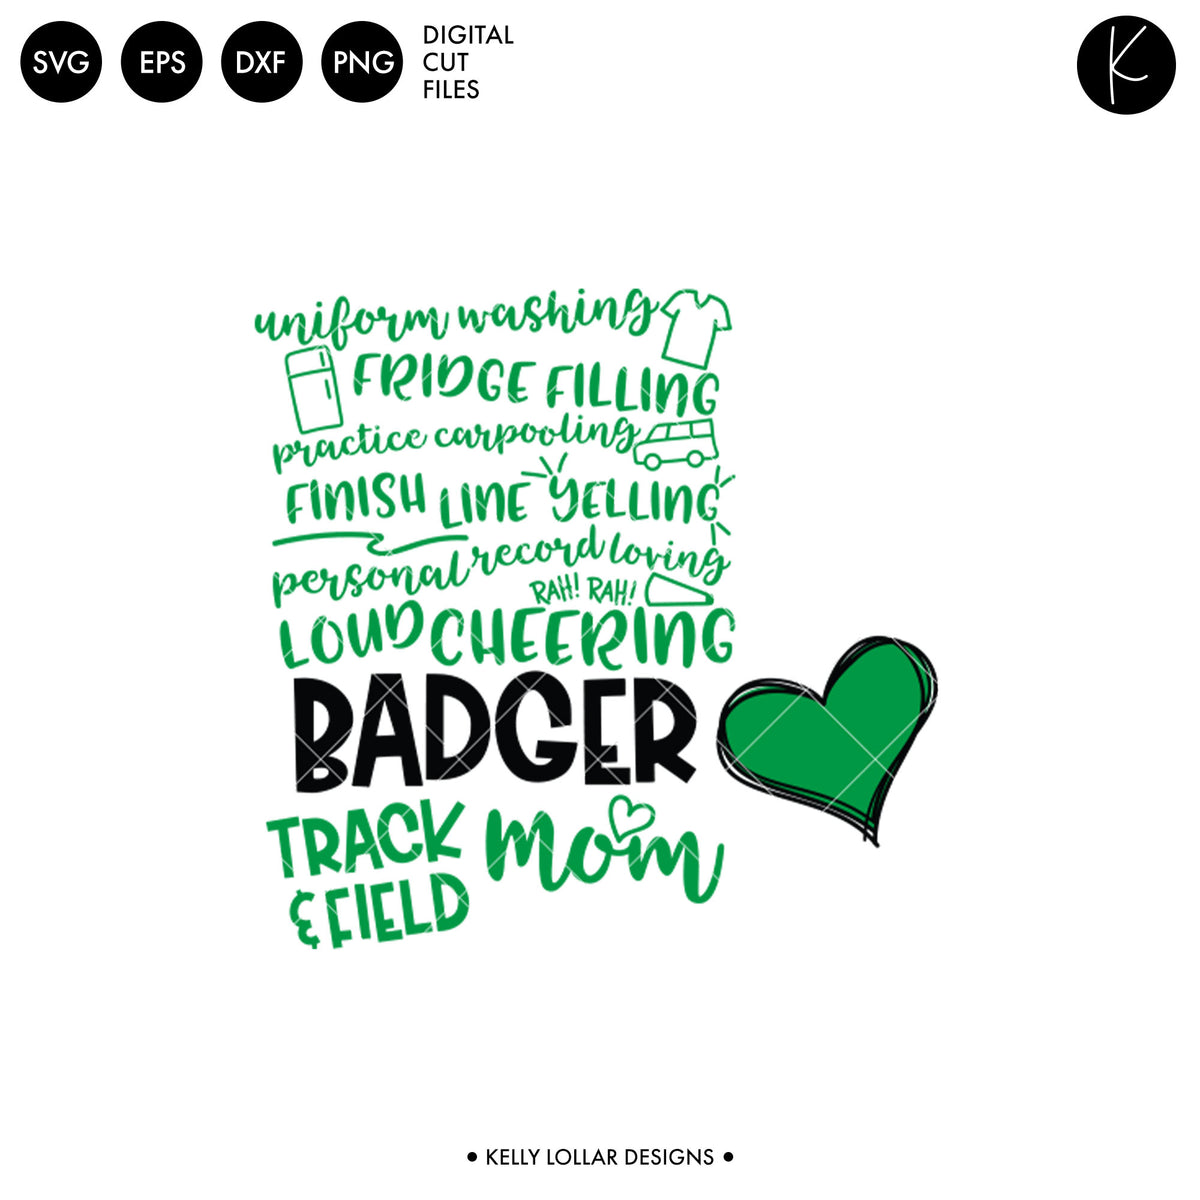 Badgers Track &amp; Field Bundle | SVG DXF EPS PNG Cut Files